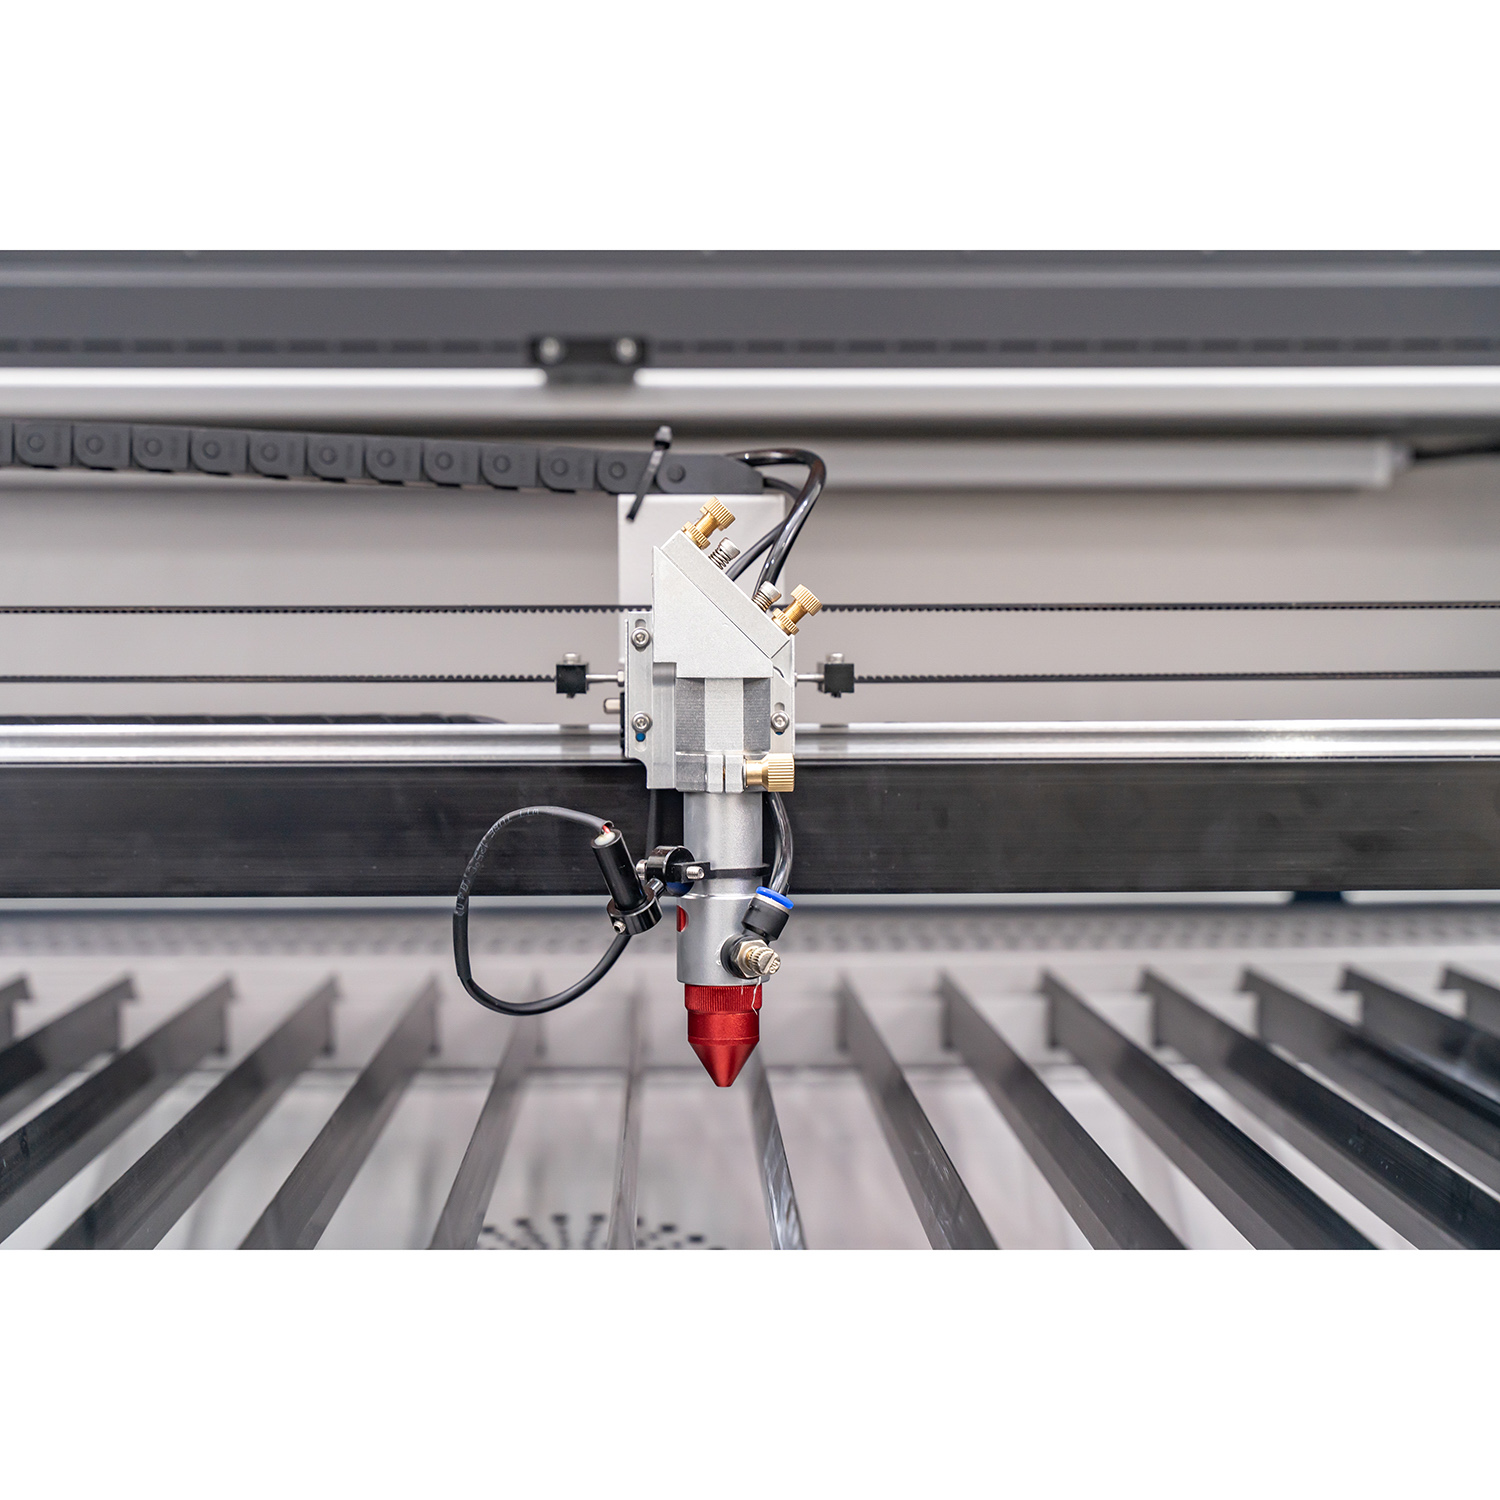 1390 90W 100W 130W 150W 300W Laser Engraver Cutter CO2 Laser Cutting Machine for Acrylic, wood, leather, plastic, glass, density board